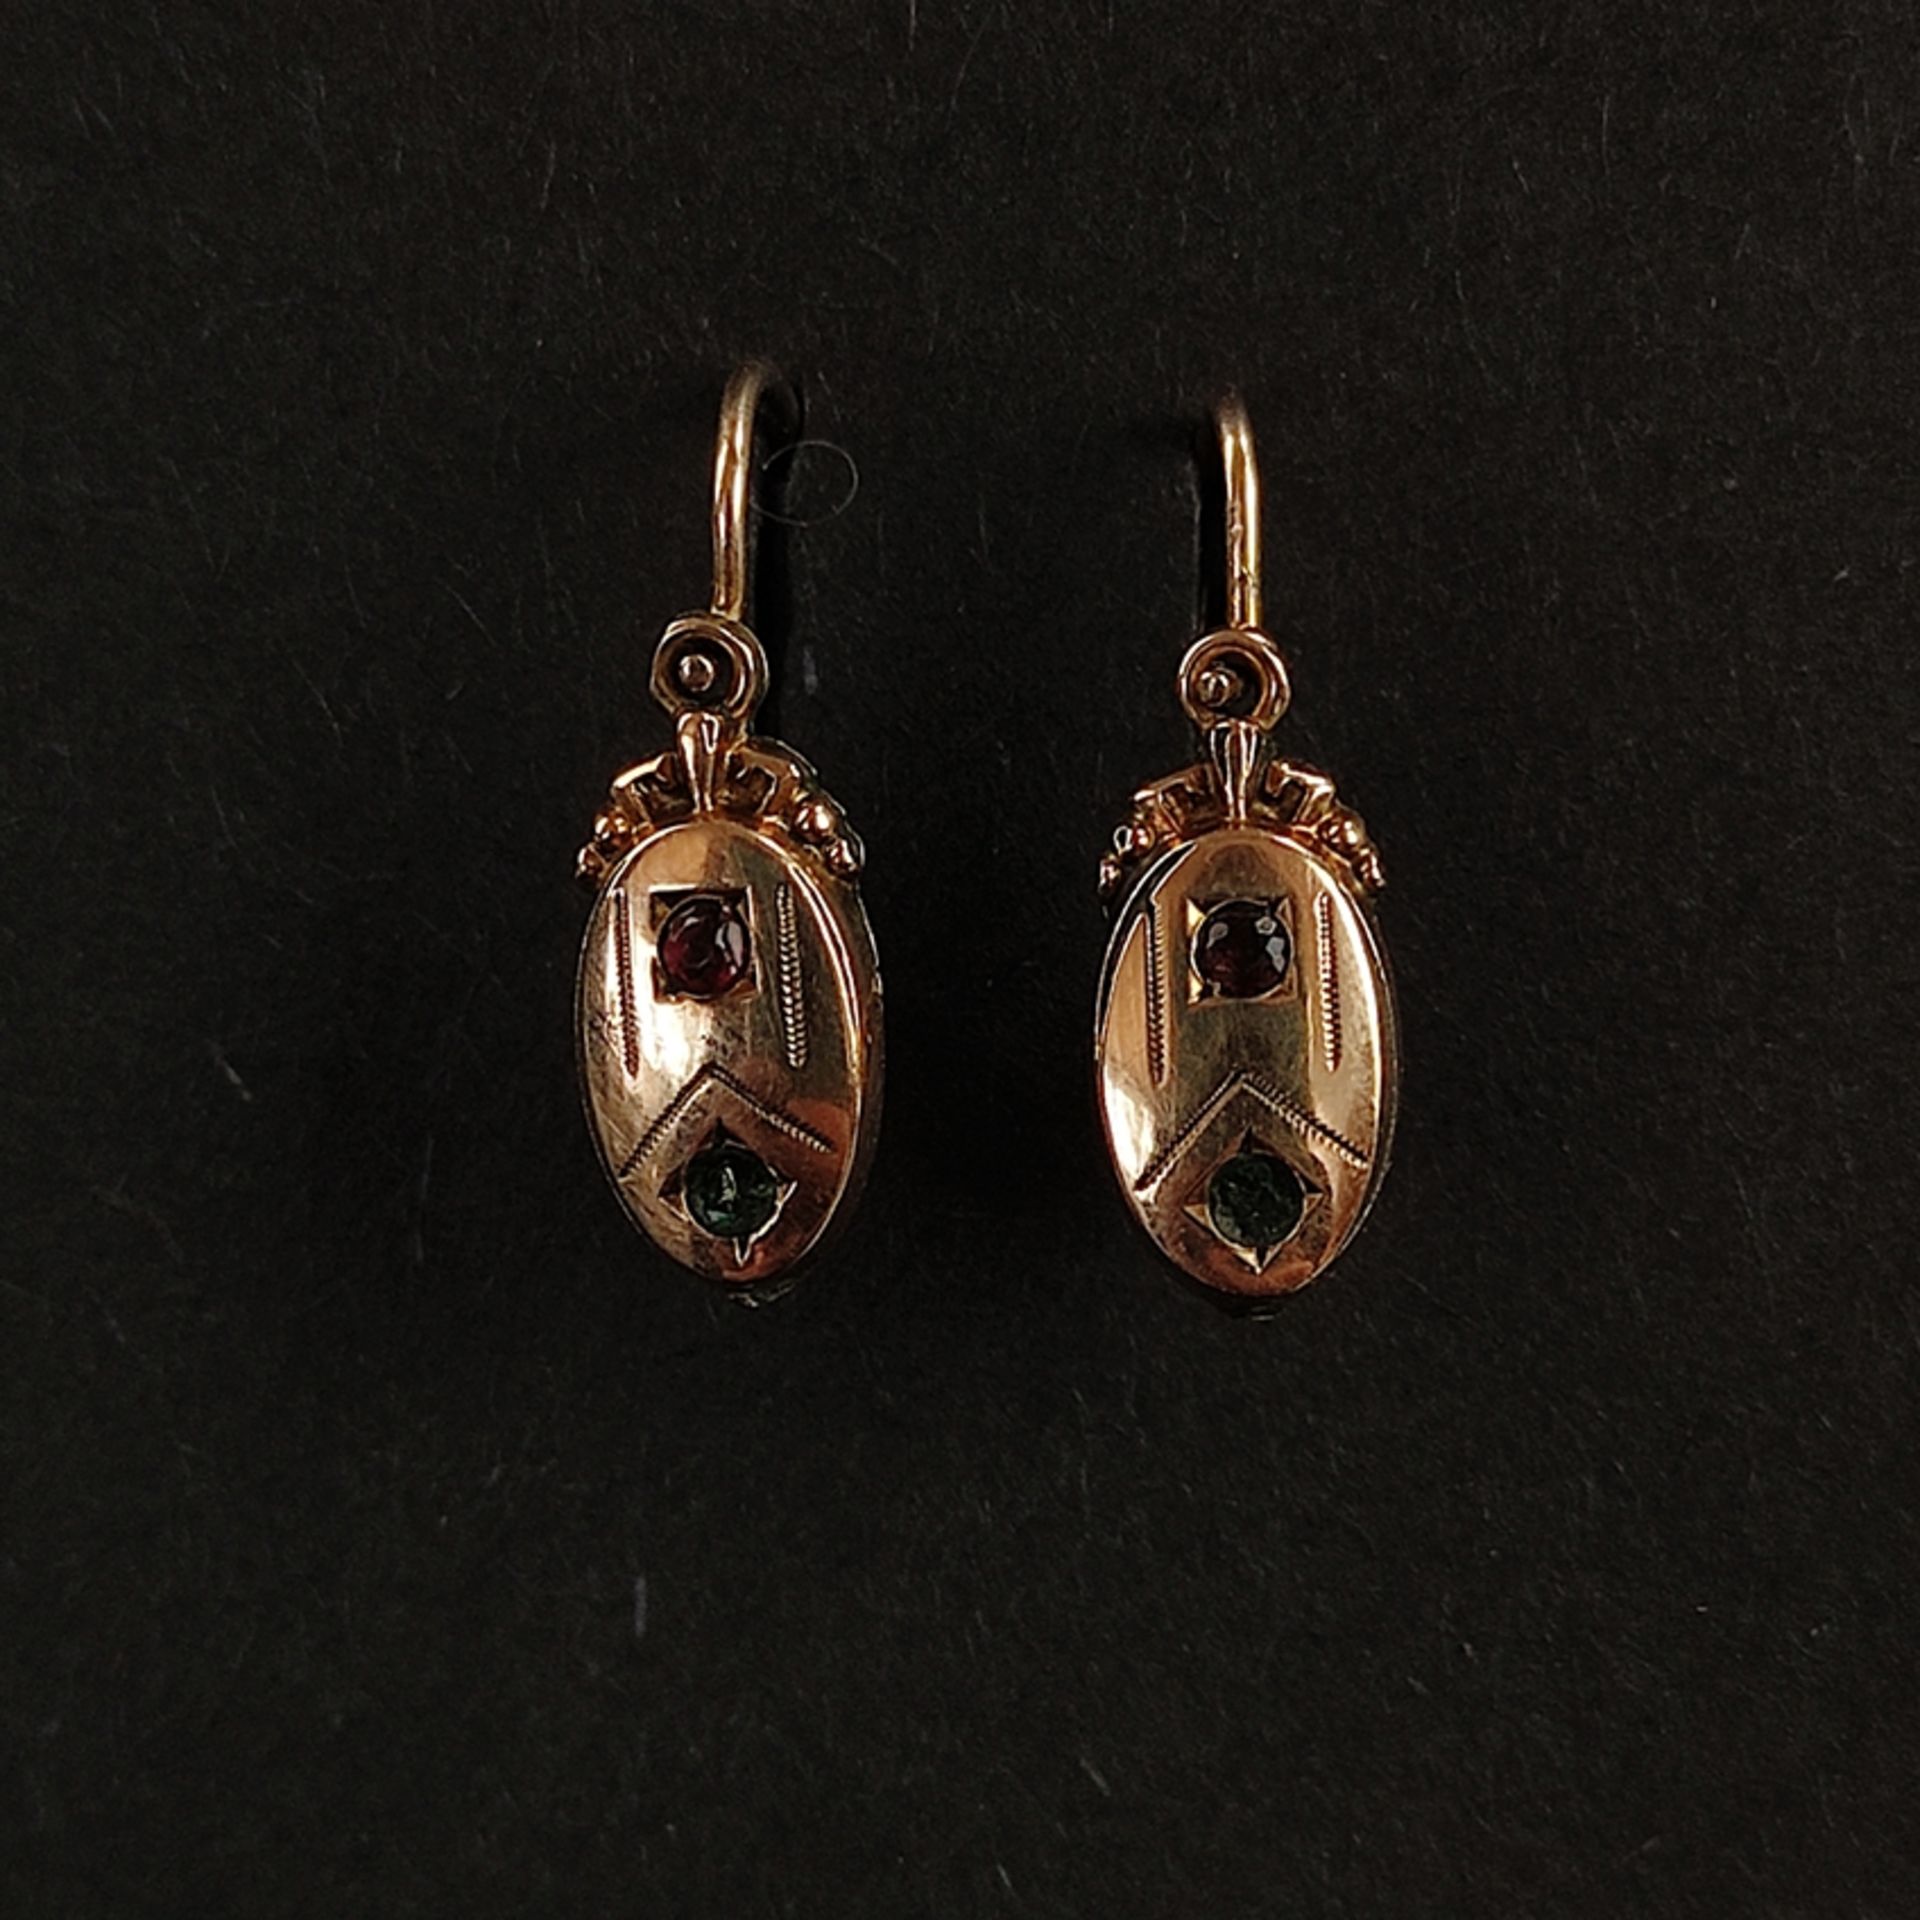 Pair of antique earrings, 585/14K rose gold (tested), 0.88g, Biedermeier, mid 19th century, each se